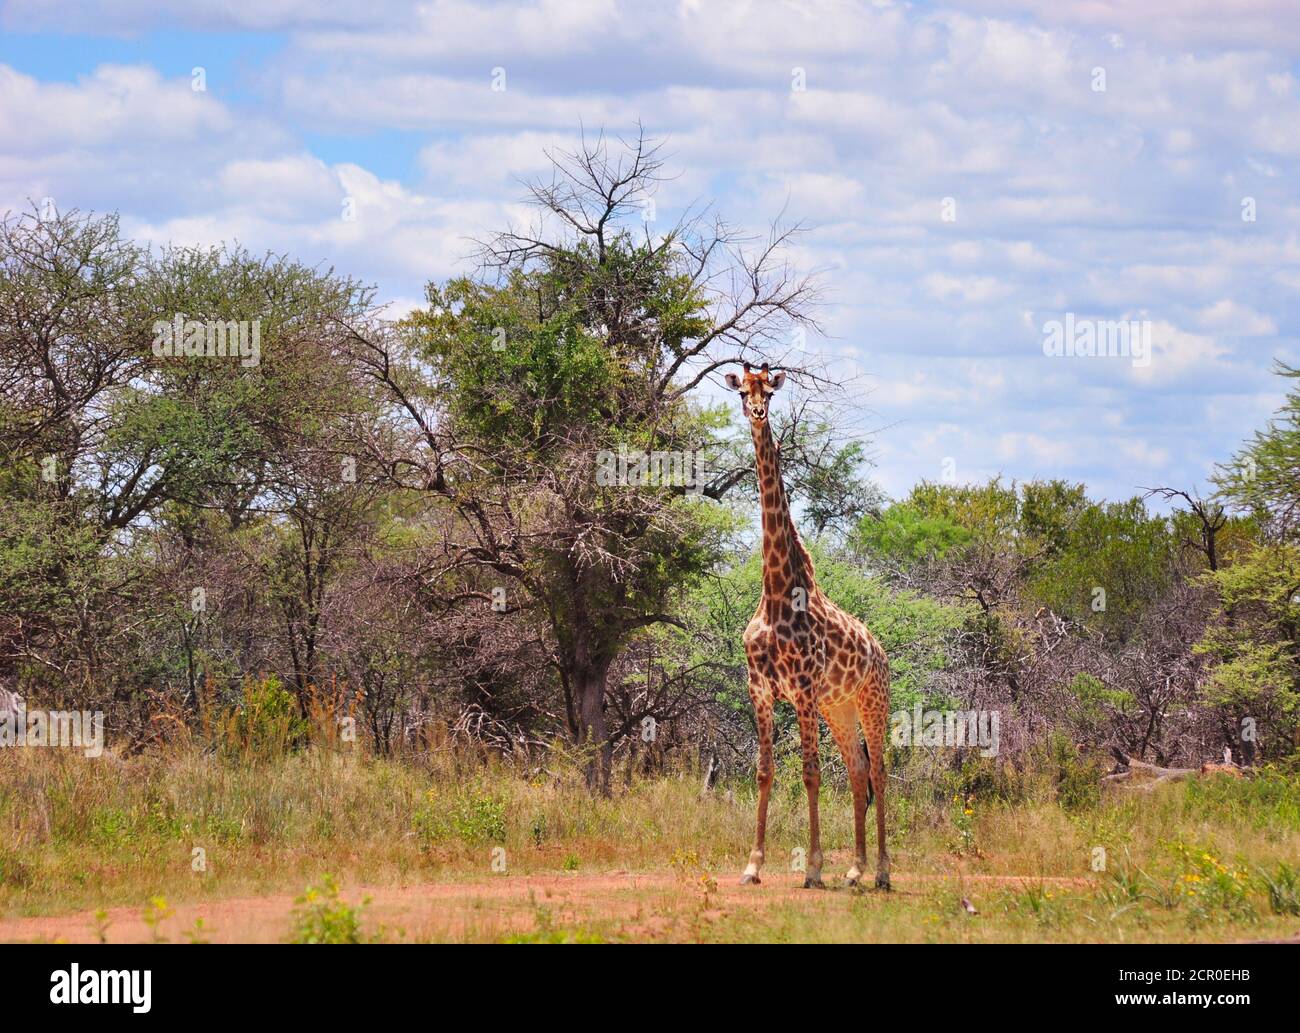 Giraffe grazing, South Africa Gauteng province Stock Photo